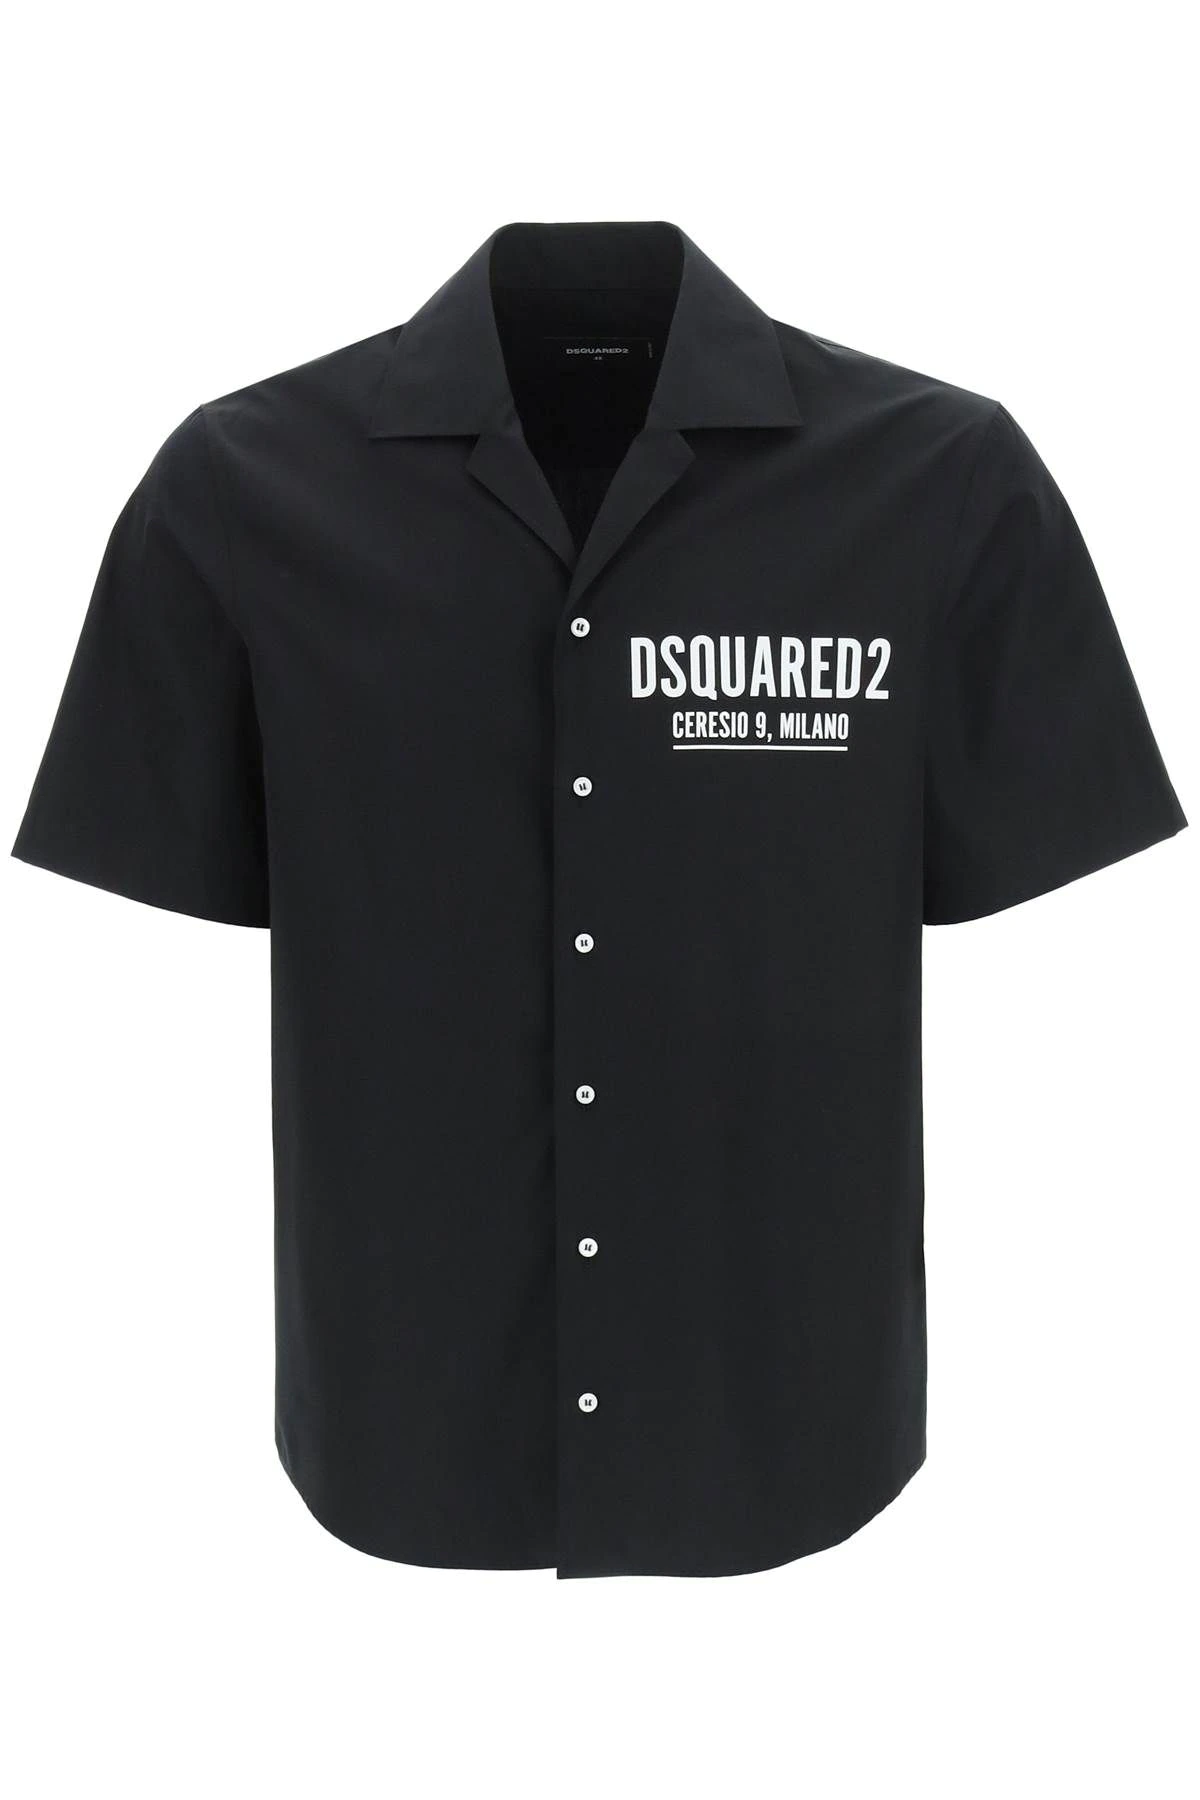 推荐DSQUARED2 男士黑色棉质短袖衬衫 S74DM0557-S36275-900商品